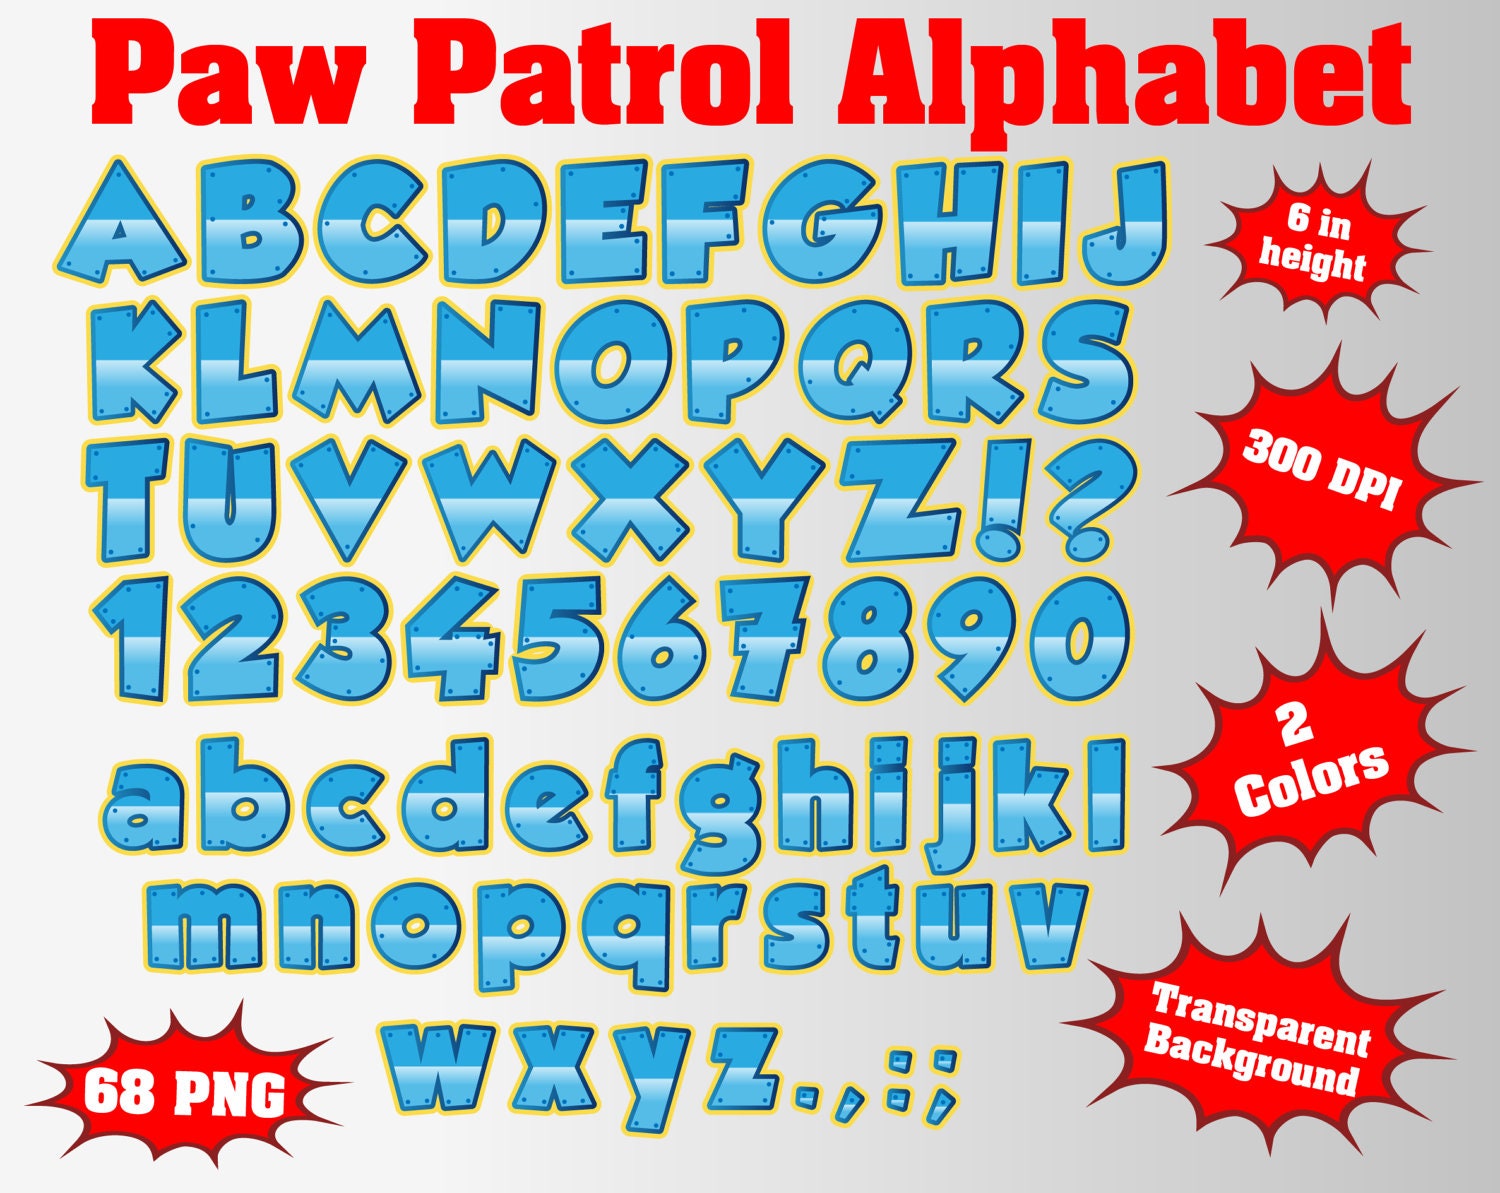 paw patrol font maker free